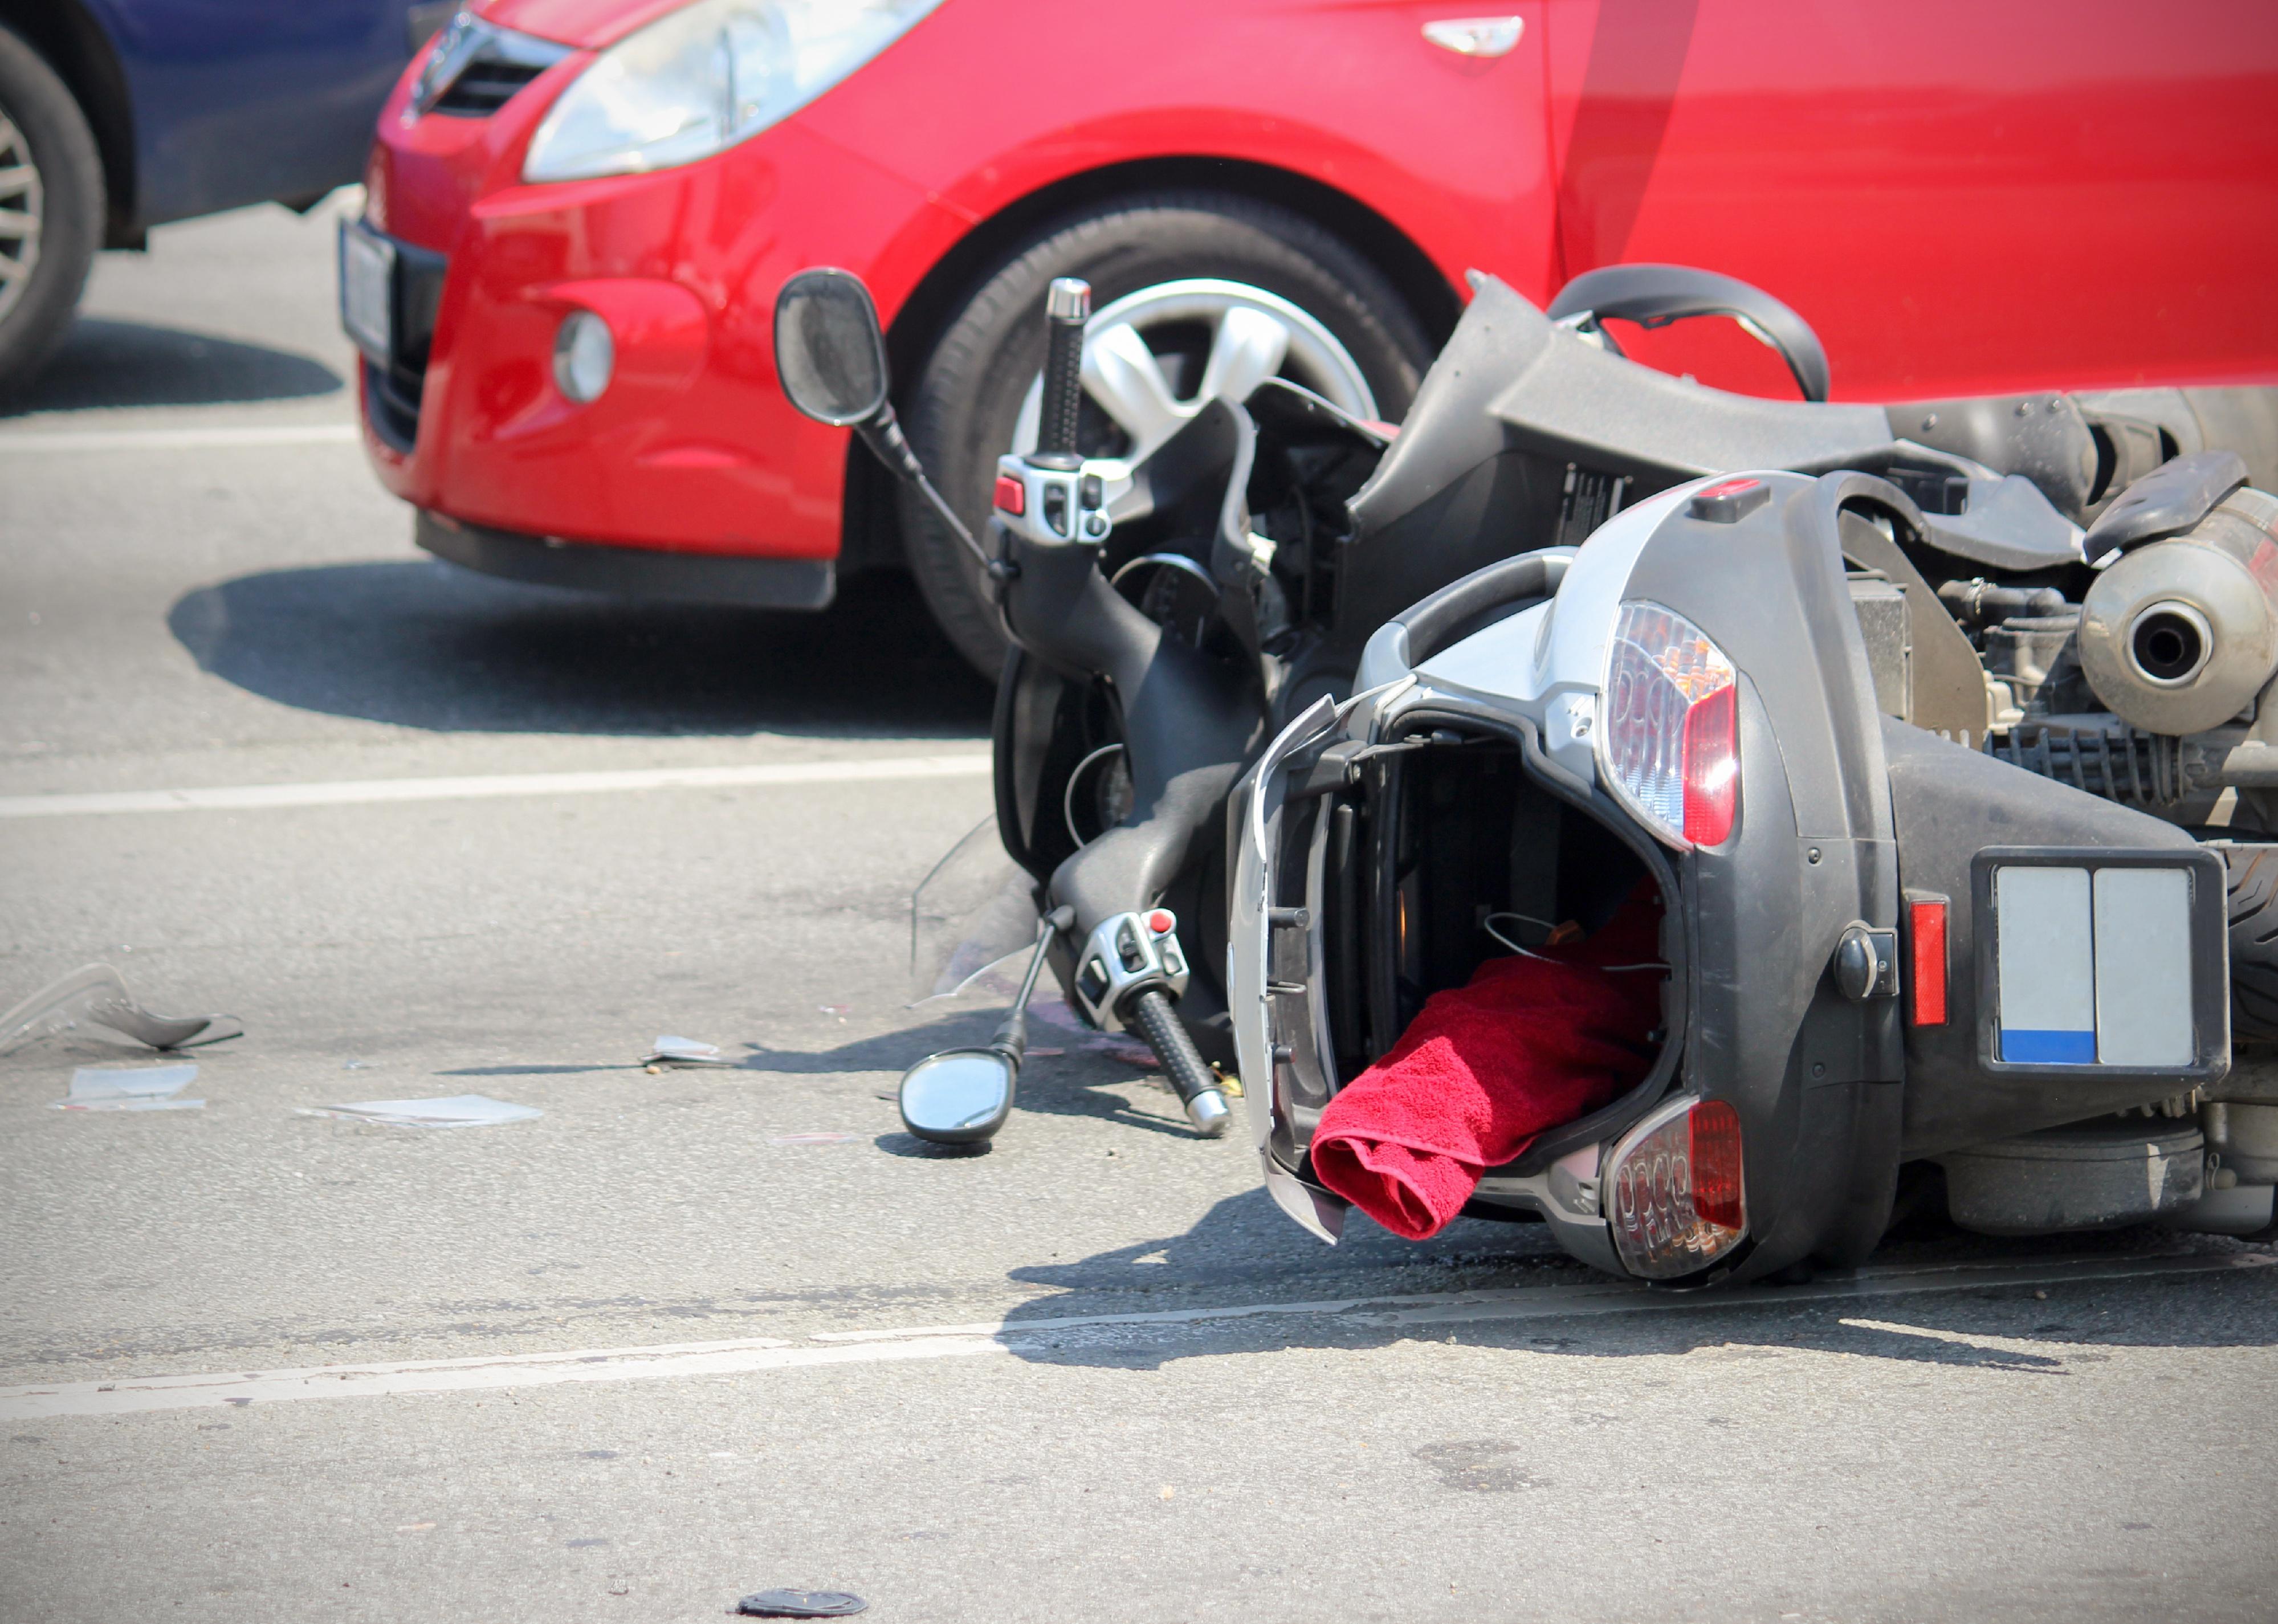 Car accident scene with motor bike.